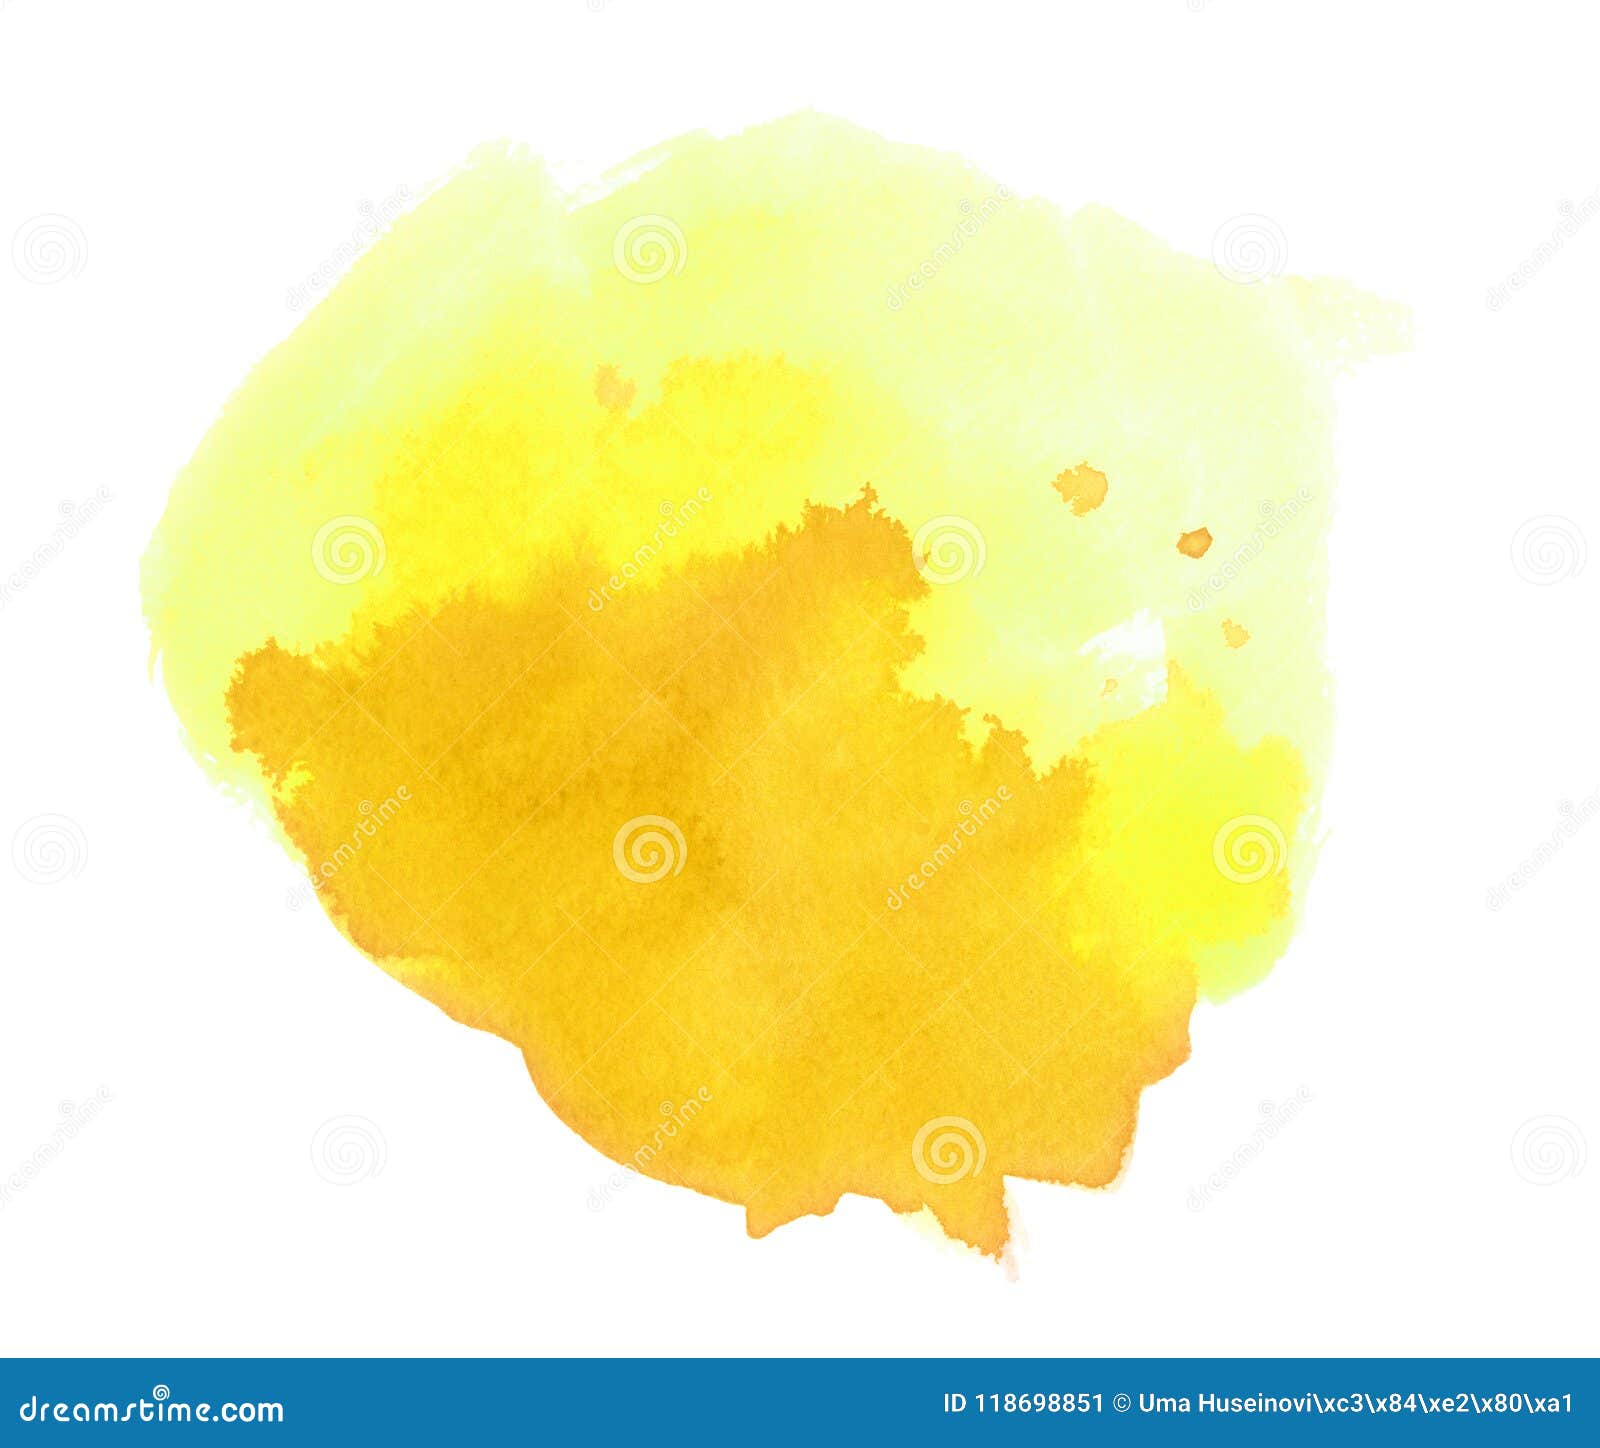 Blob of Yellow Watercolor stock illustration. Illustration of bright ...